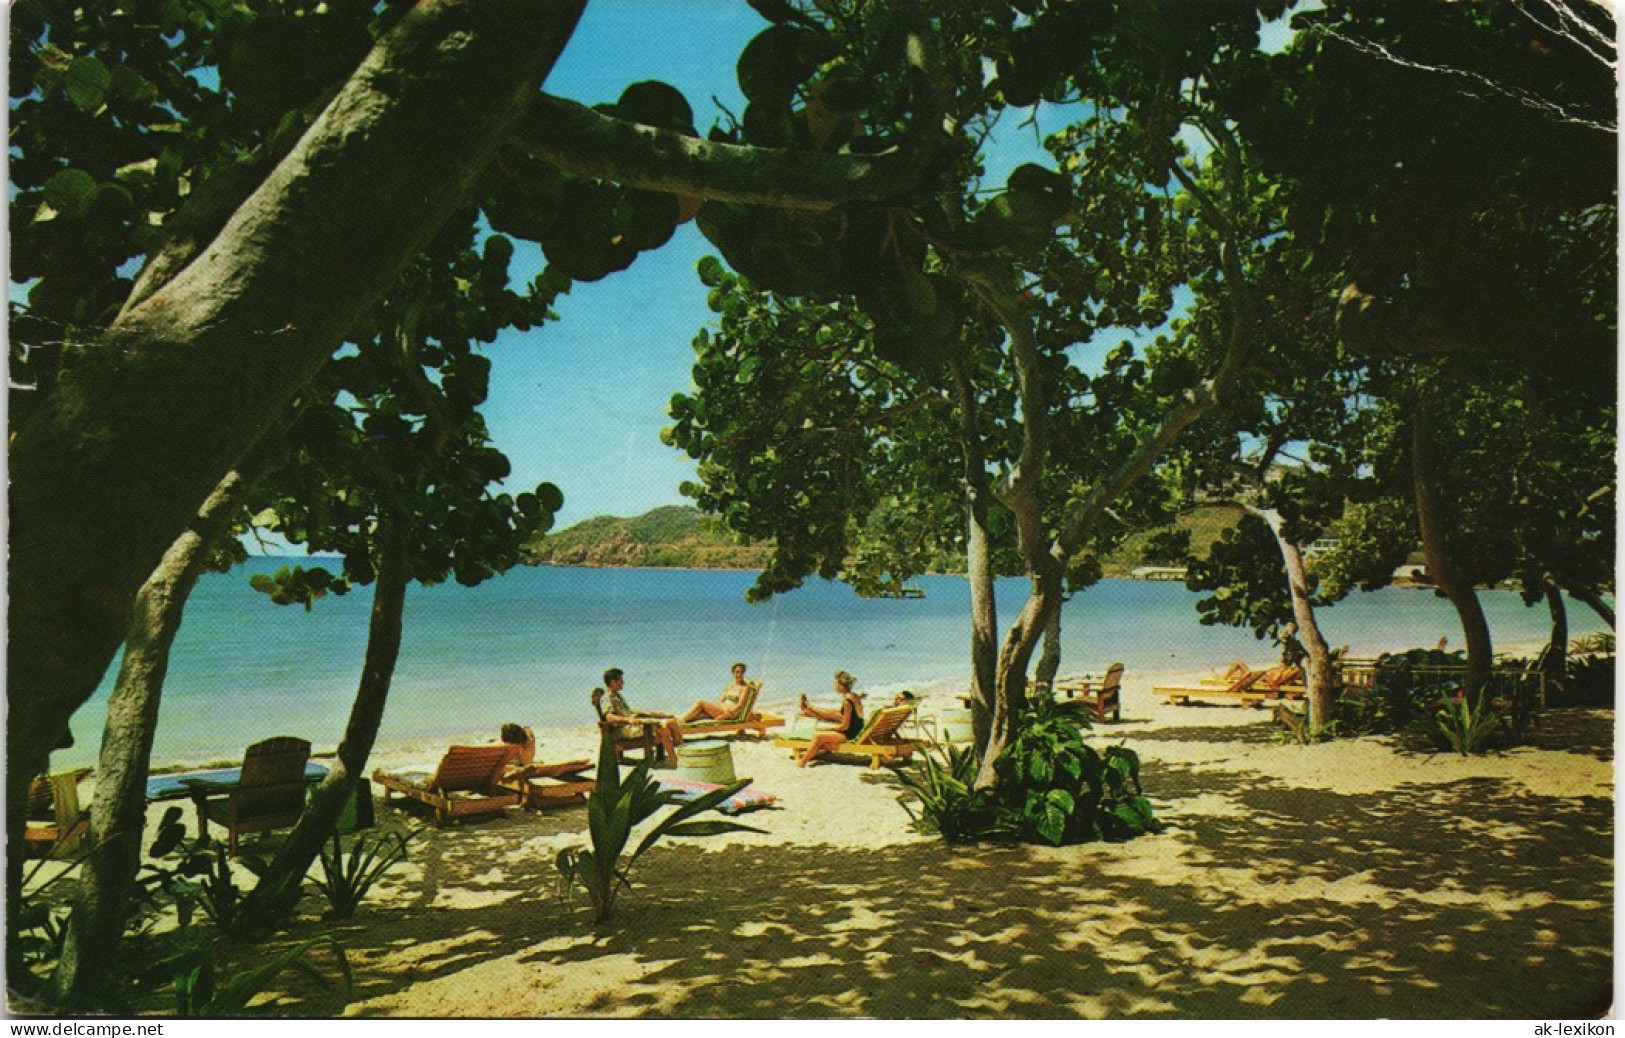 St. Thomas Sankt Thomas ISLAND BEACHCOMBER HOTEL Karibik Caribean Sea 1964 - Isole Vergini Americane